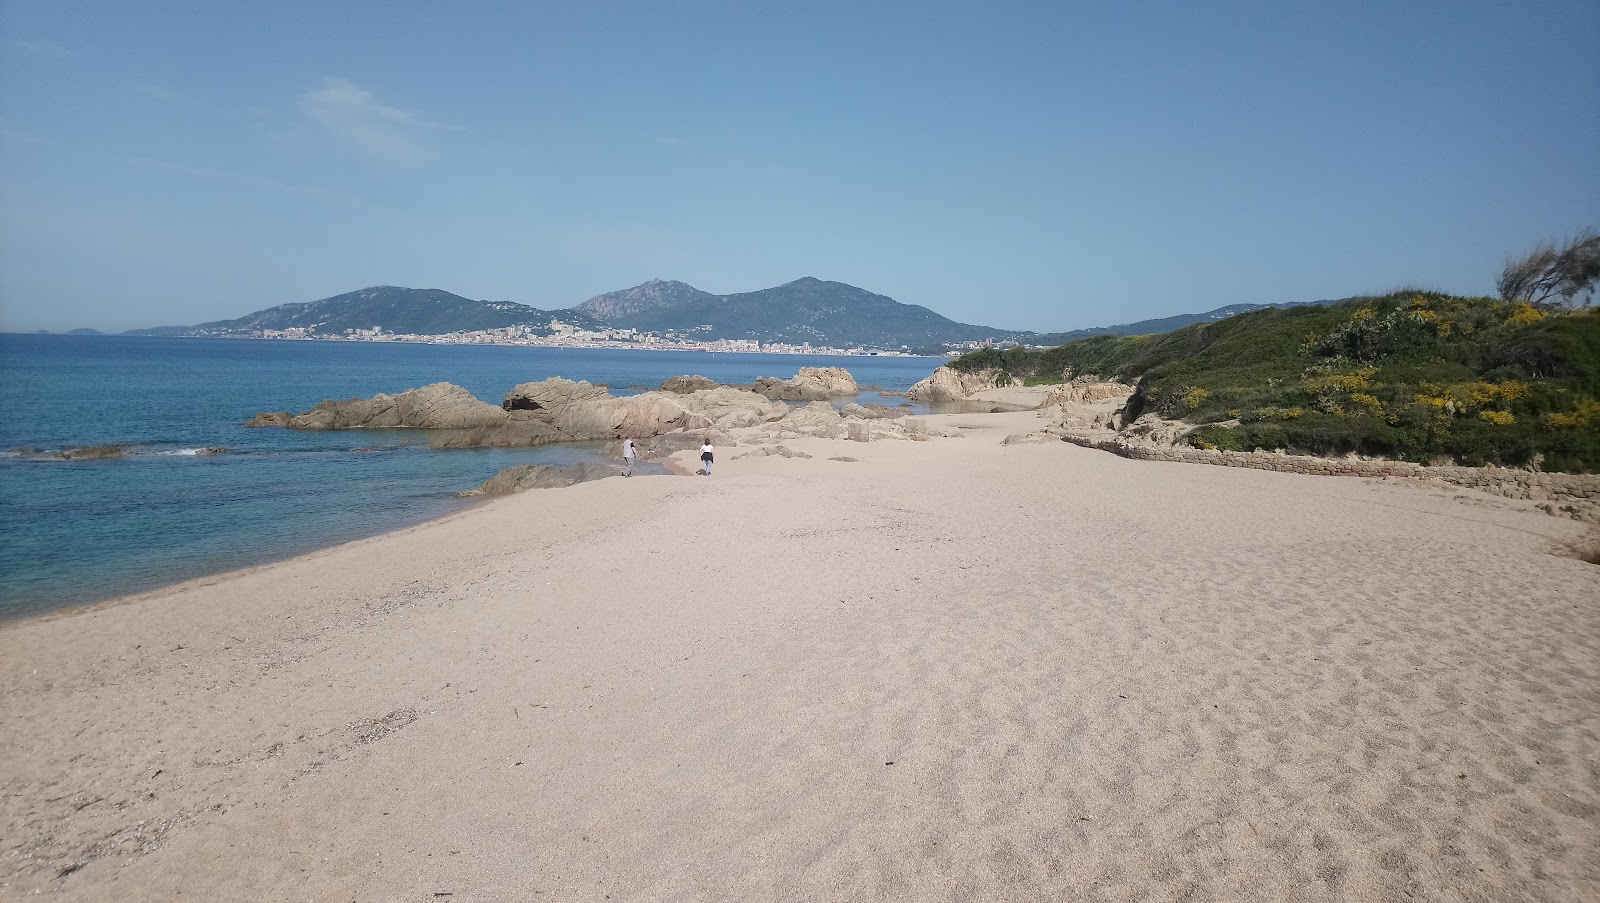 Fotografie cu Capitello beach și peisajul său frumos